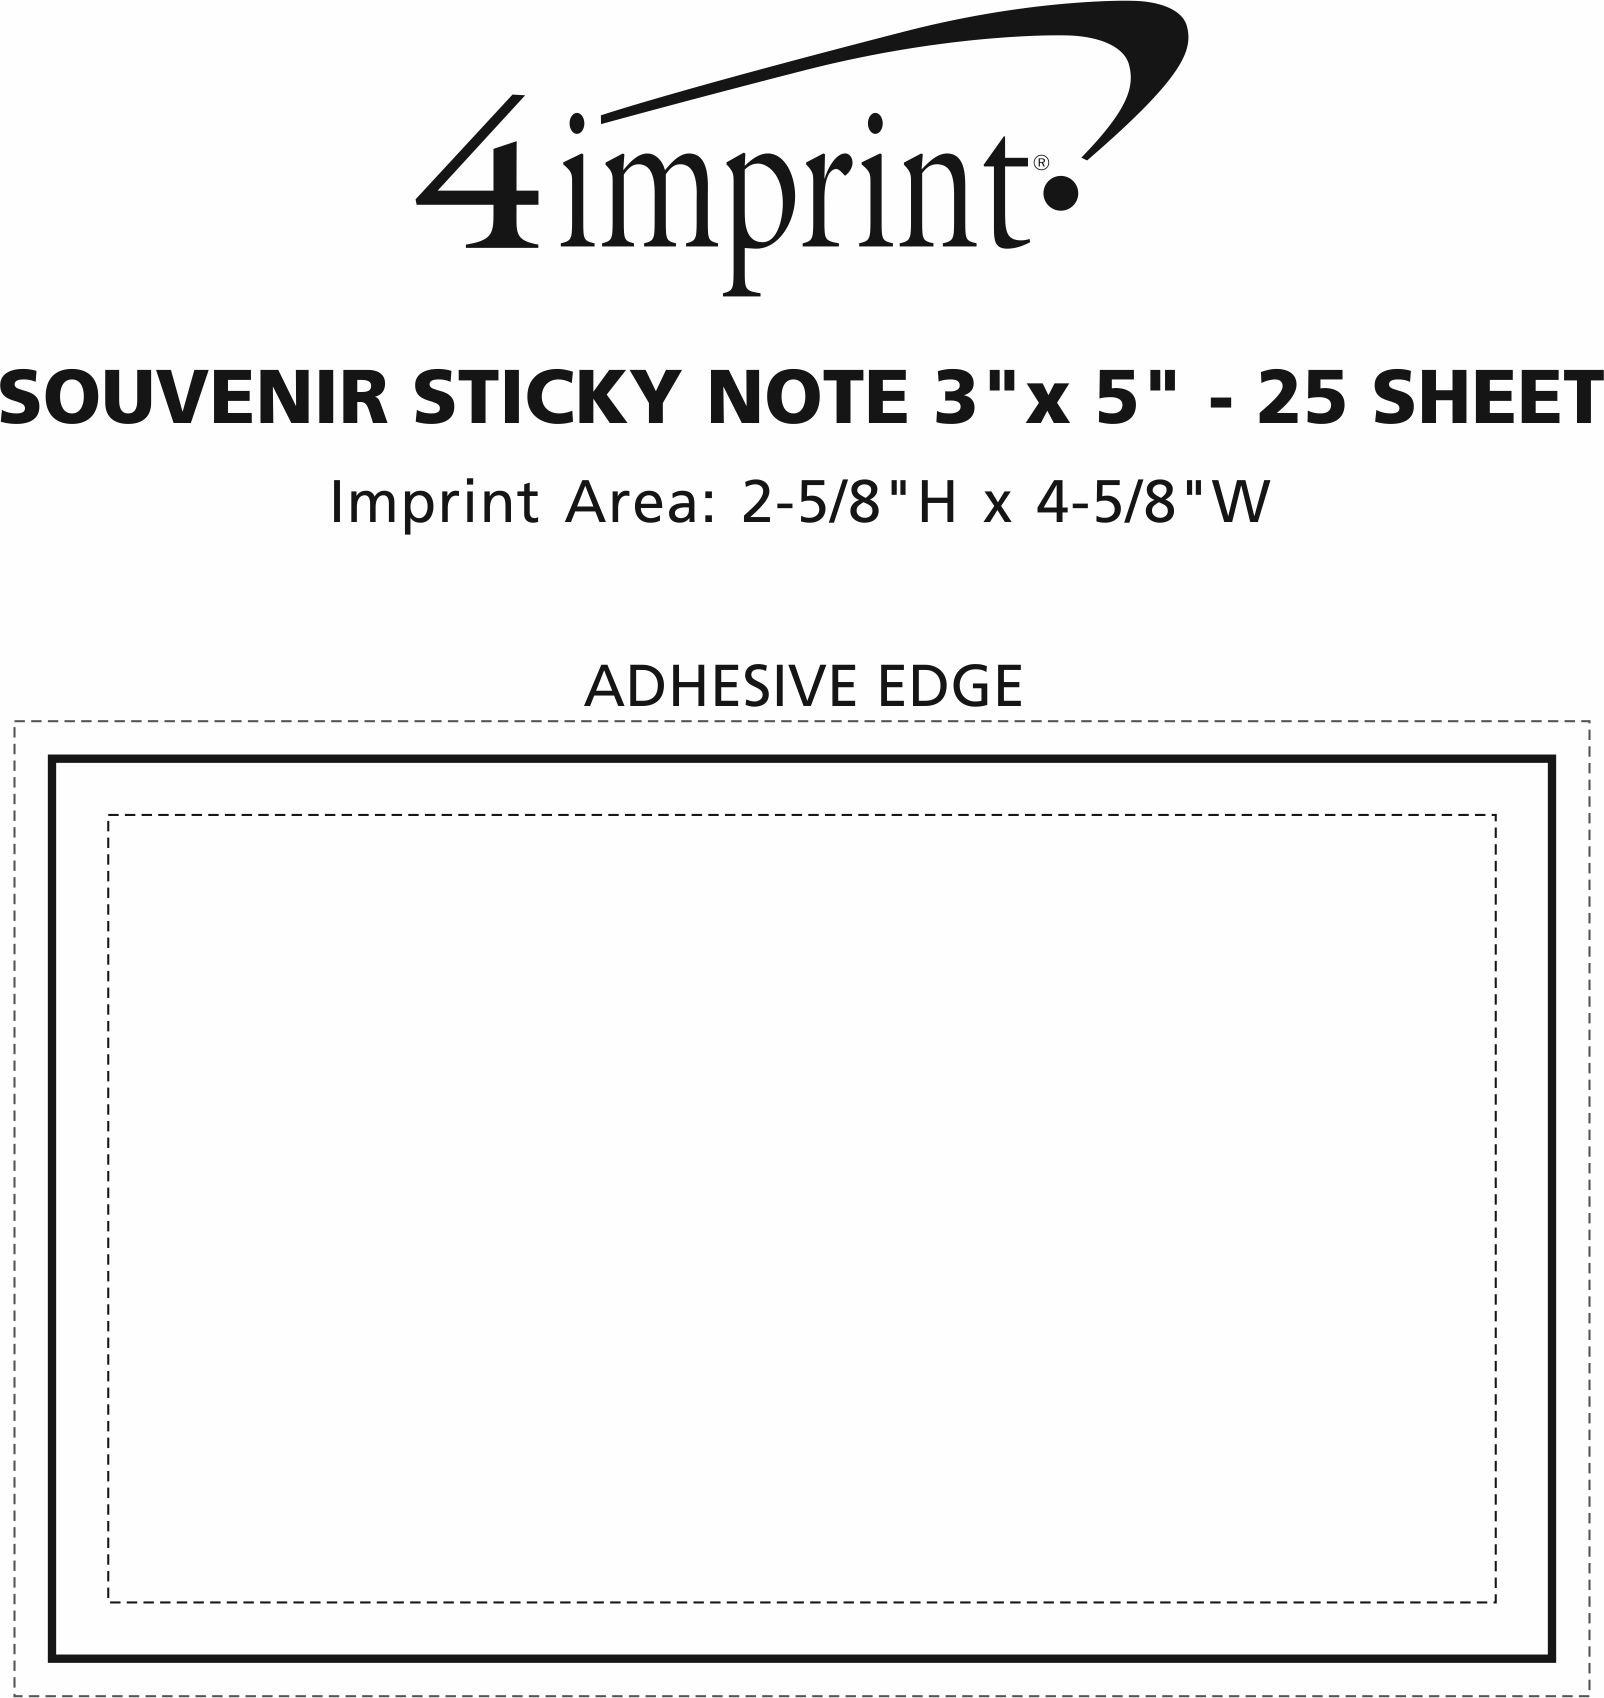 Imprint Area of Souvenir Sticky Note - 3" x 5" - 25 Sheet